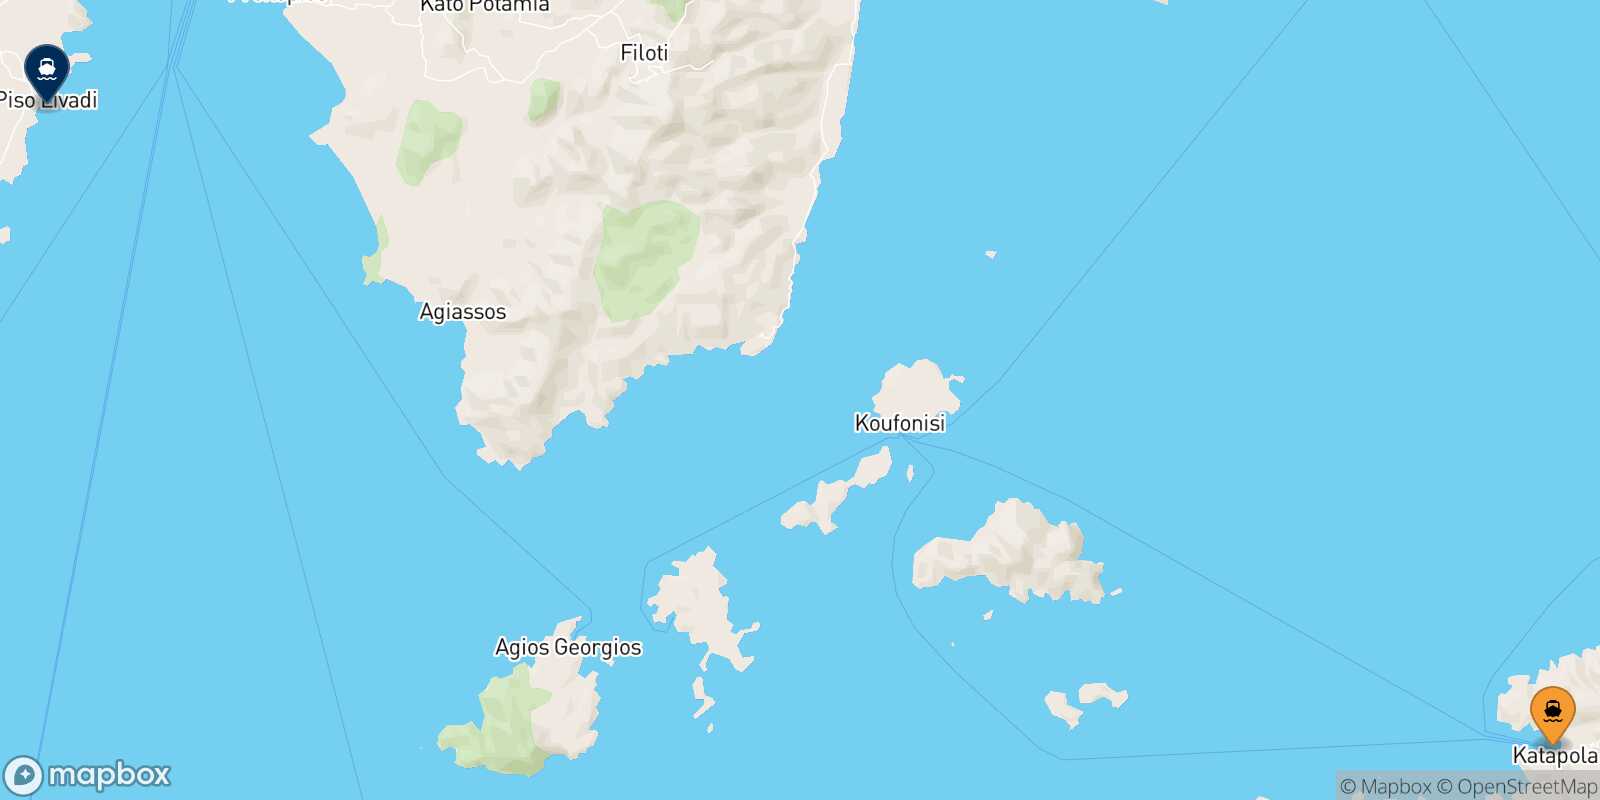 Carte des traverséesKatapola (Amorgos) Piso Livadi (Paros)